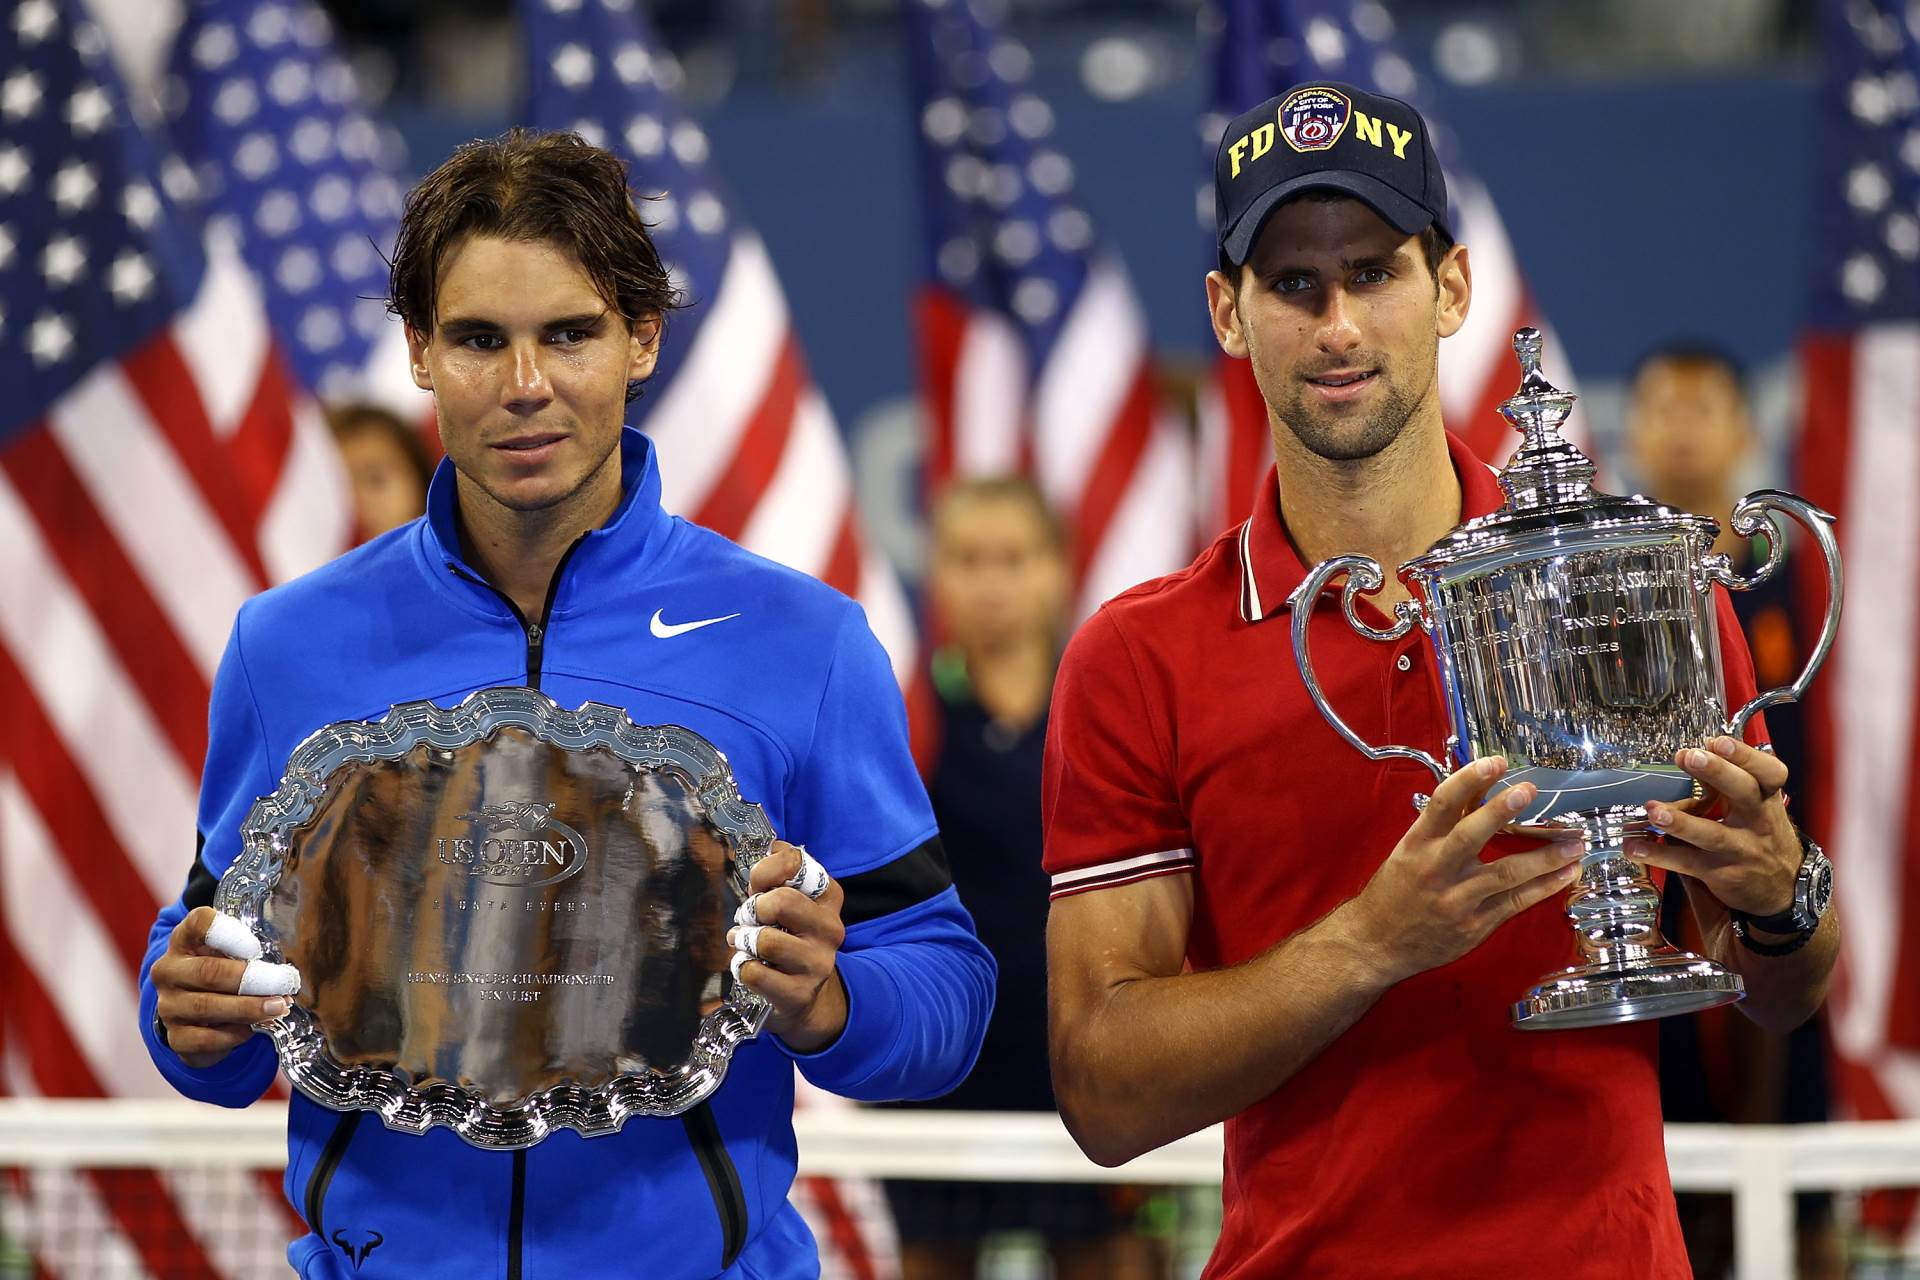  Novak-Djokovic-ce-igrati-US-open-Rafael-Nadal-mozda-nece-igrati-US-open-Dzon-Mekinro-korona-virus 